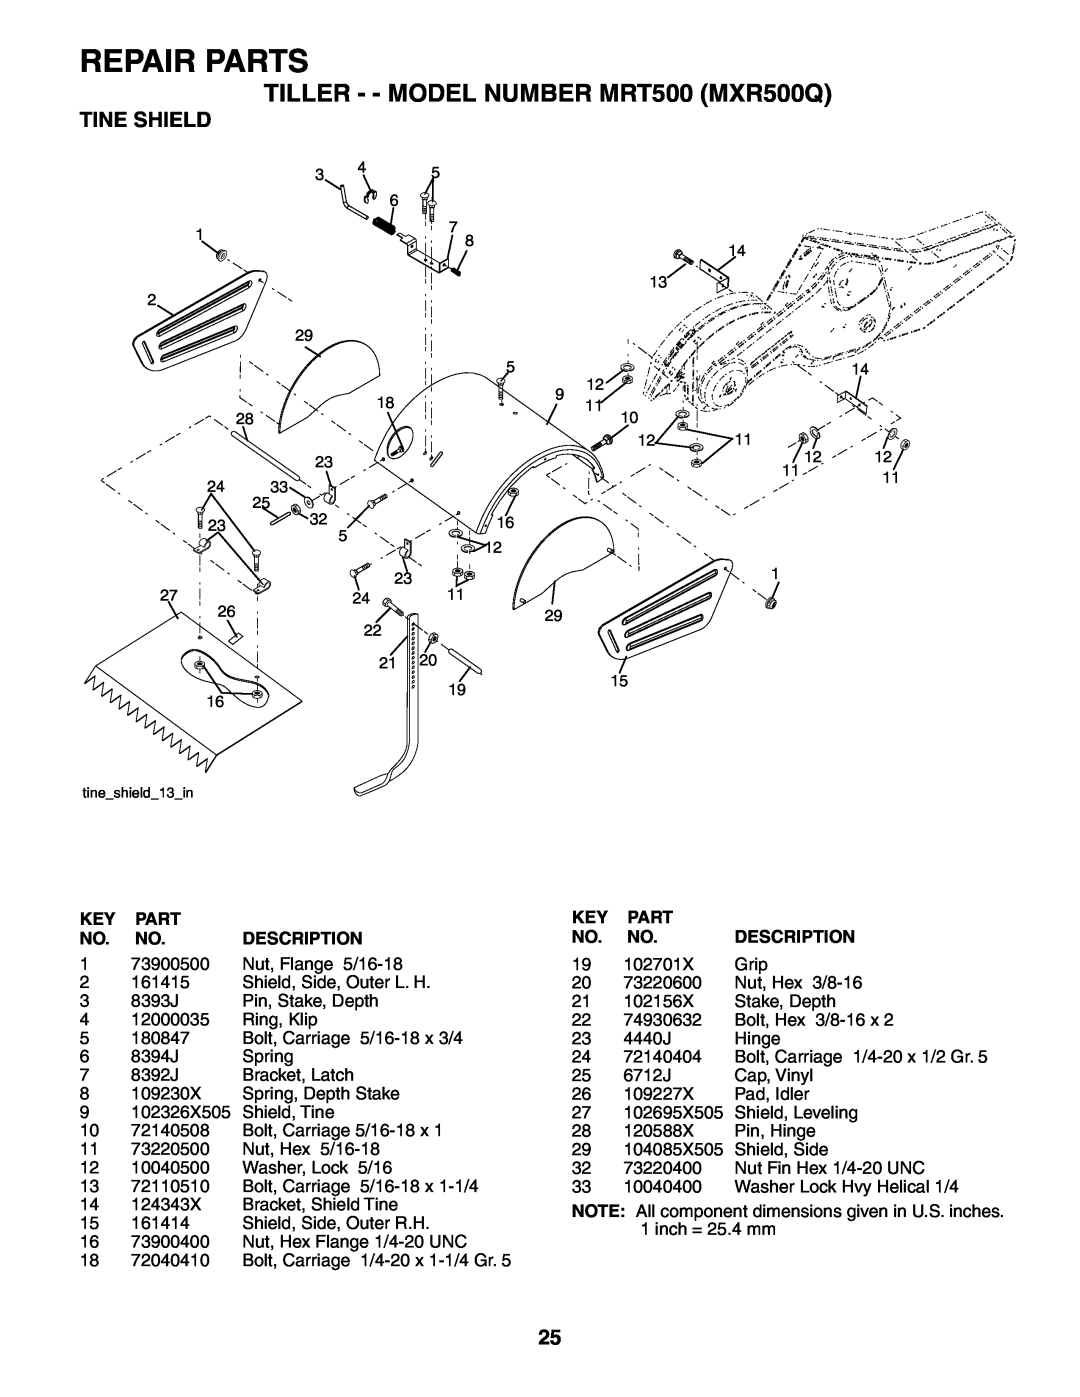 Poulan owner manual Tine Shield, Repair Parts, TILLER - - MODEL NUMBER MRT500 MXR500Q, Key Part No. No. Description 